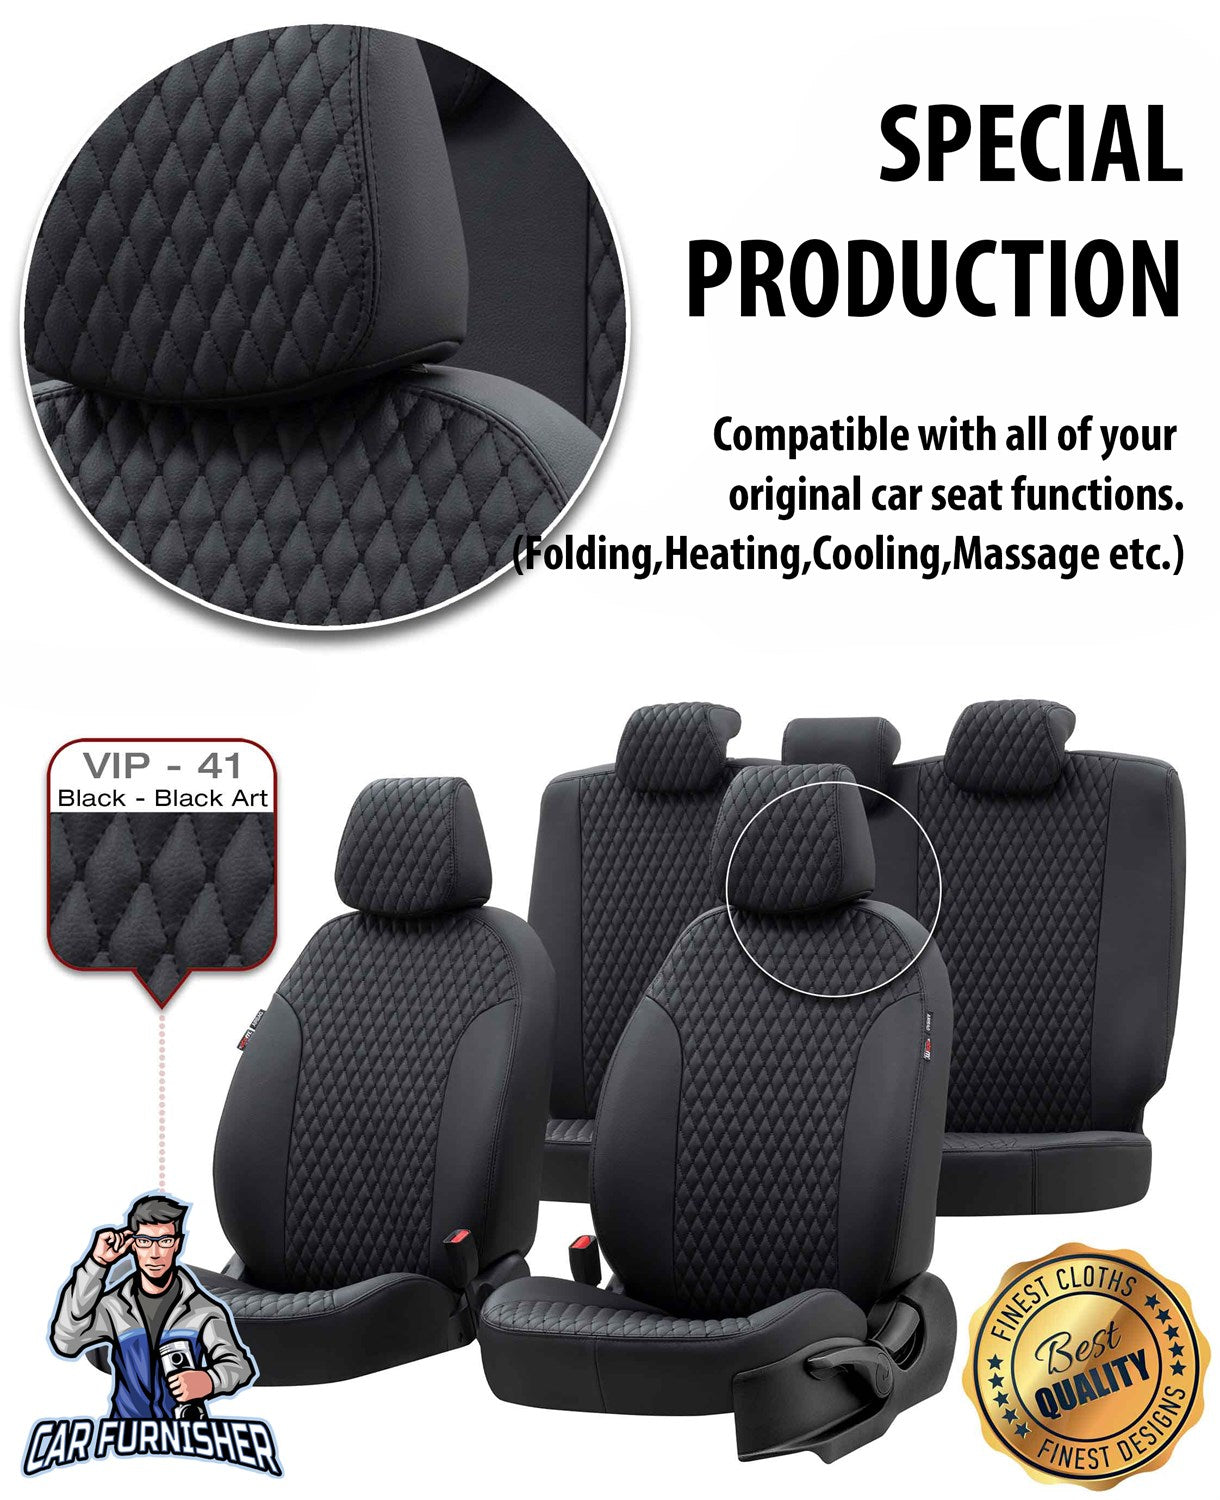 Mitsubishi Spacestar Seat Cover Amsterdam Leather Design Beige Leather